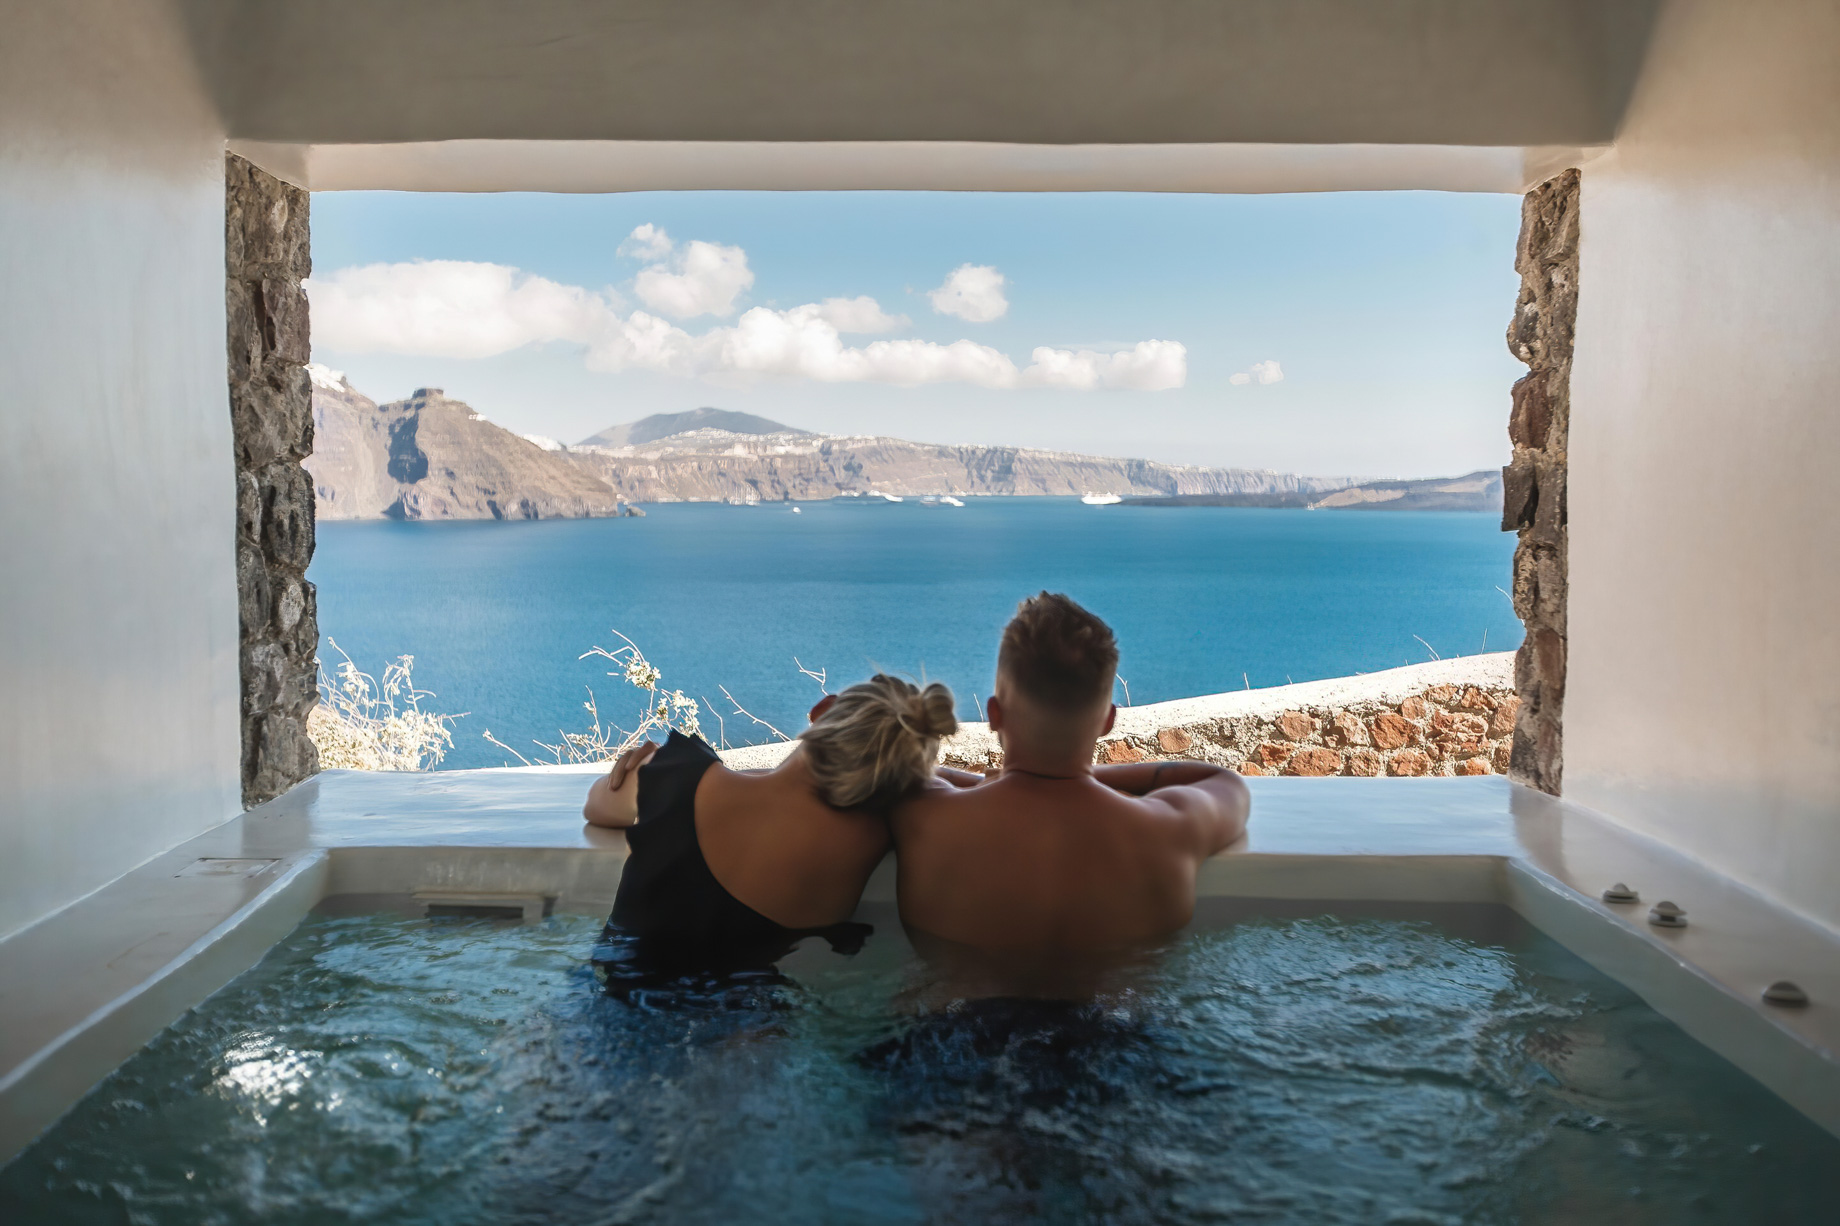 Mystique Hotel Santorini – Oia, Santorini Island, Greece - Clifftop Ocean View Villa Private Jacuzzi